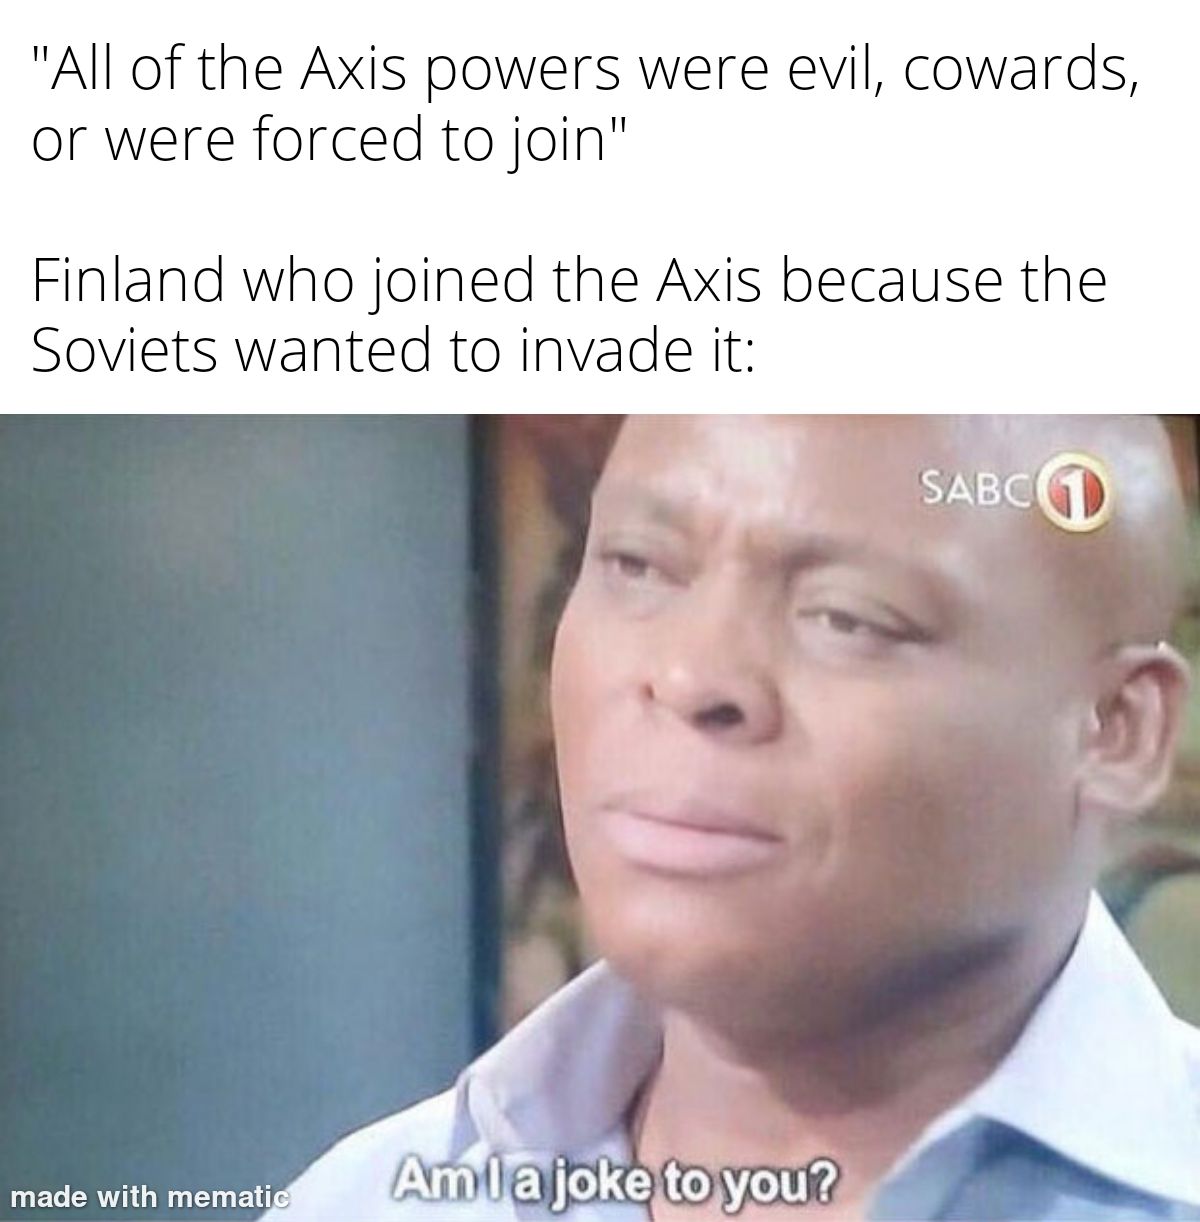 Finland wasn't evil